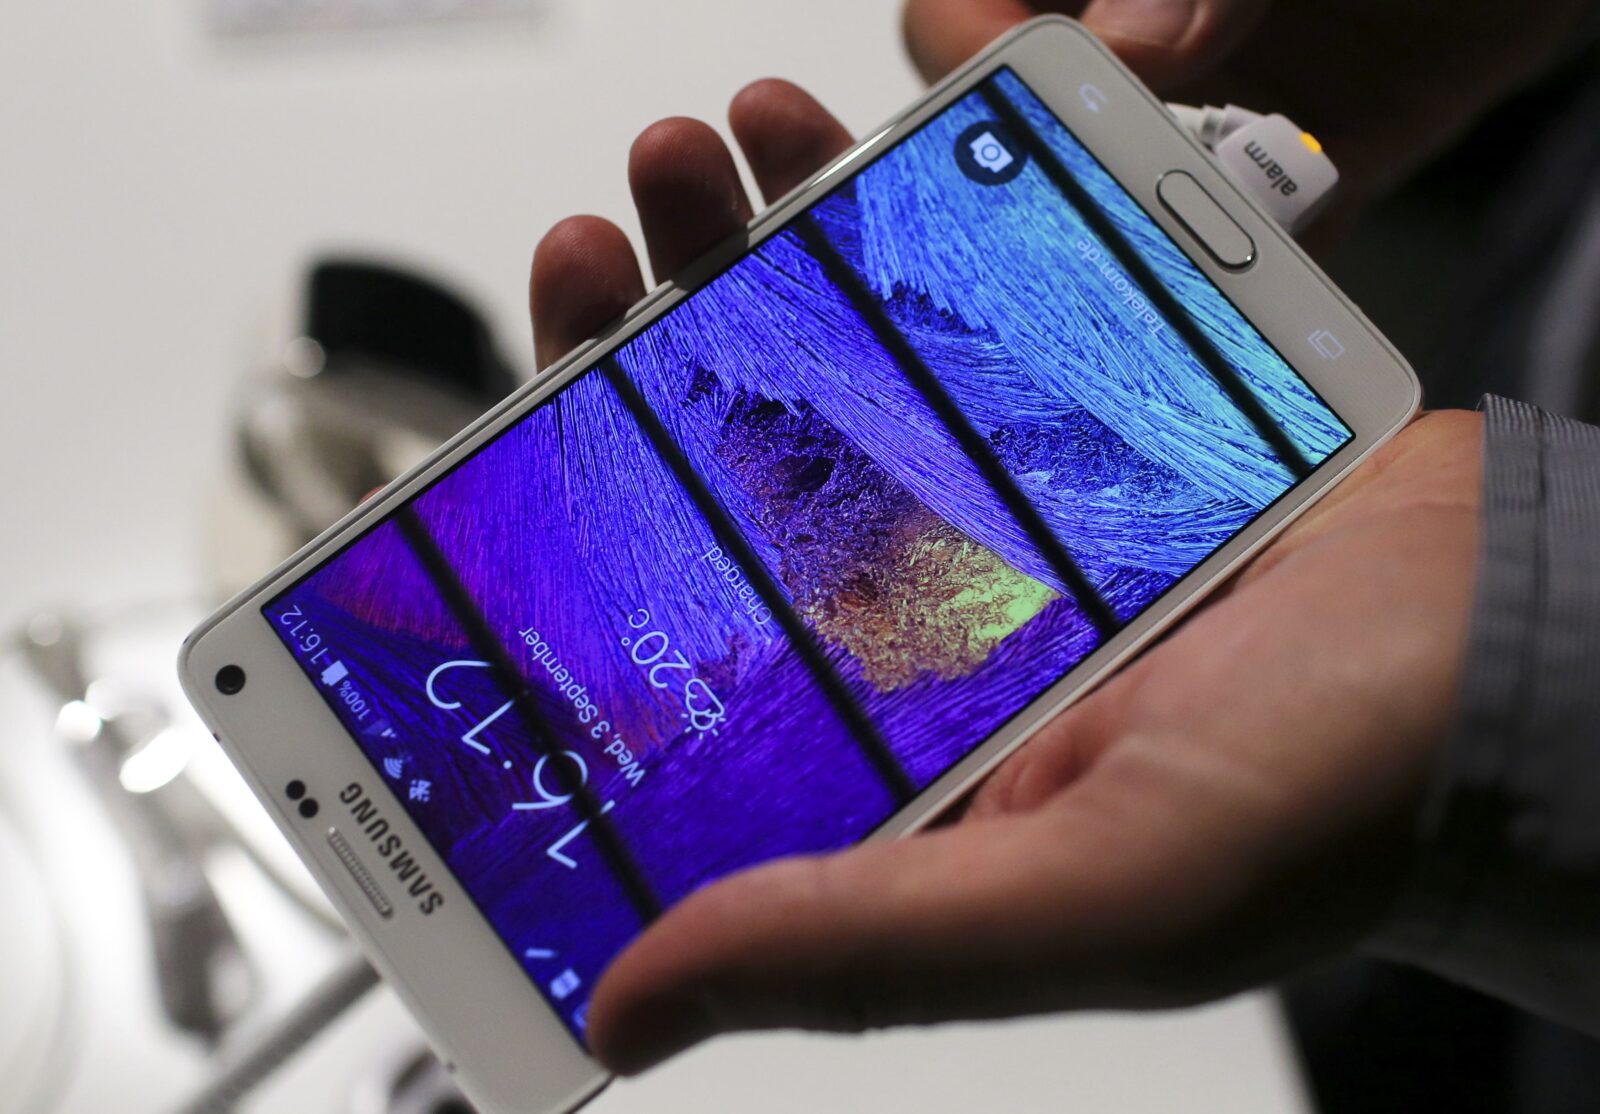 Samsung Galaxy Note 4 (Reuters)